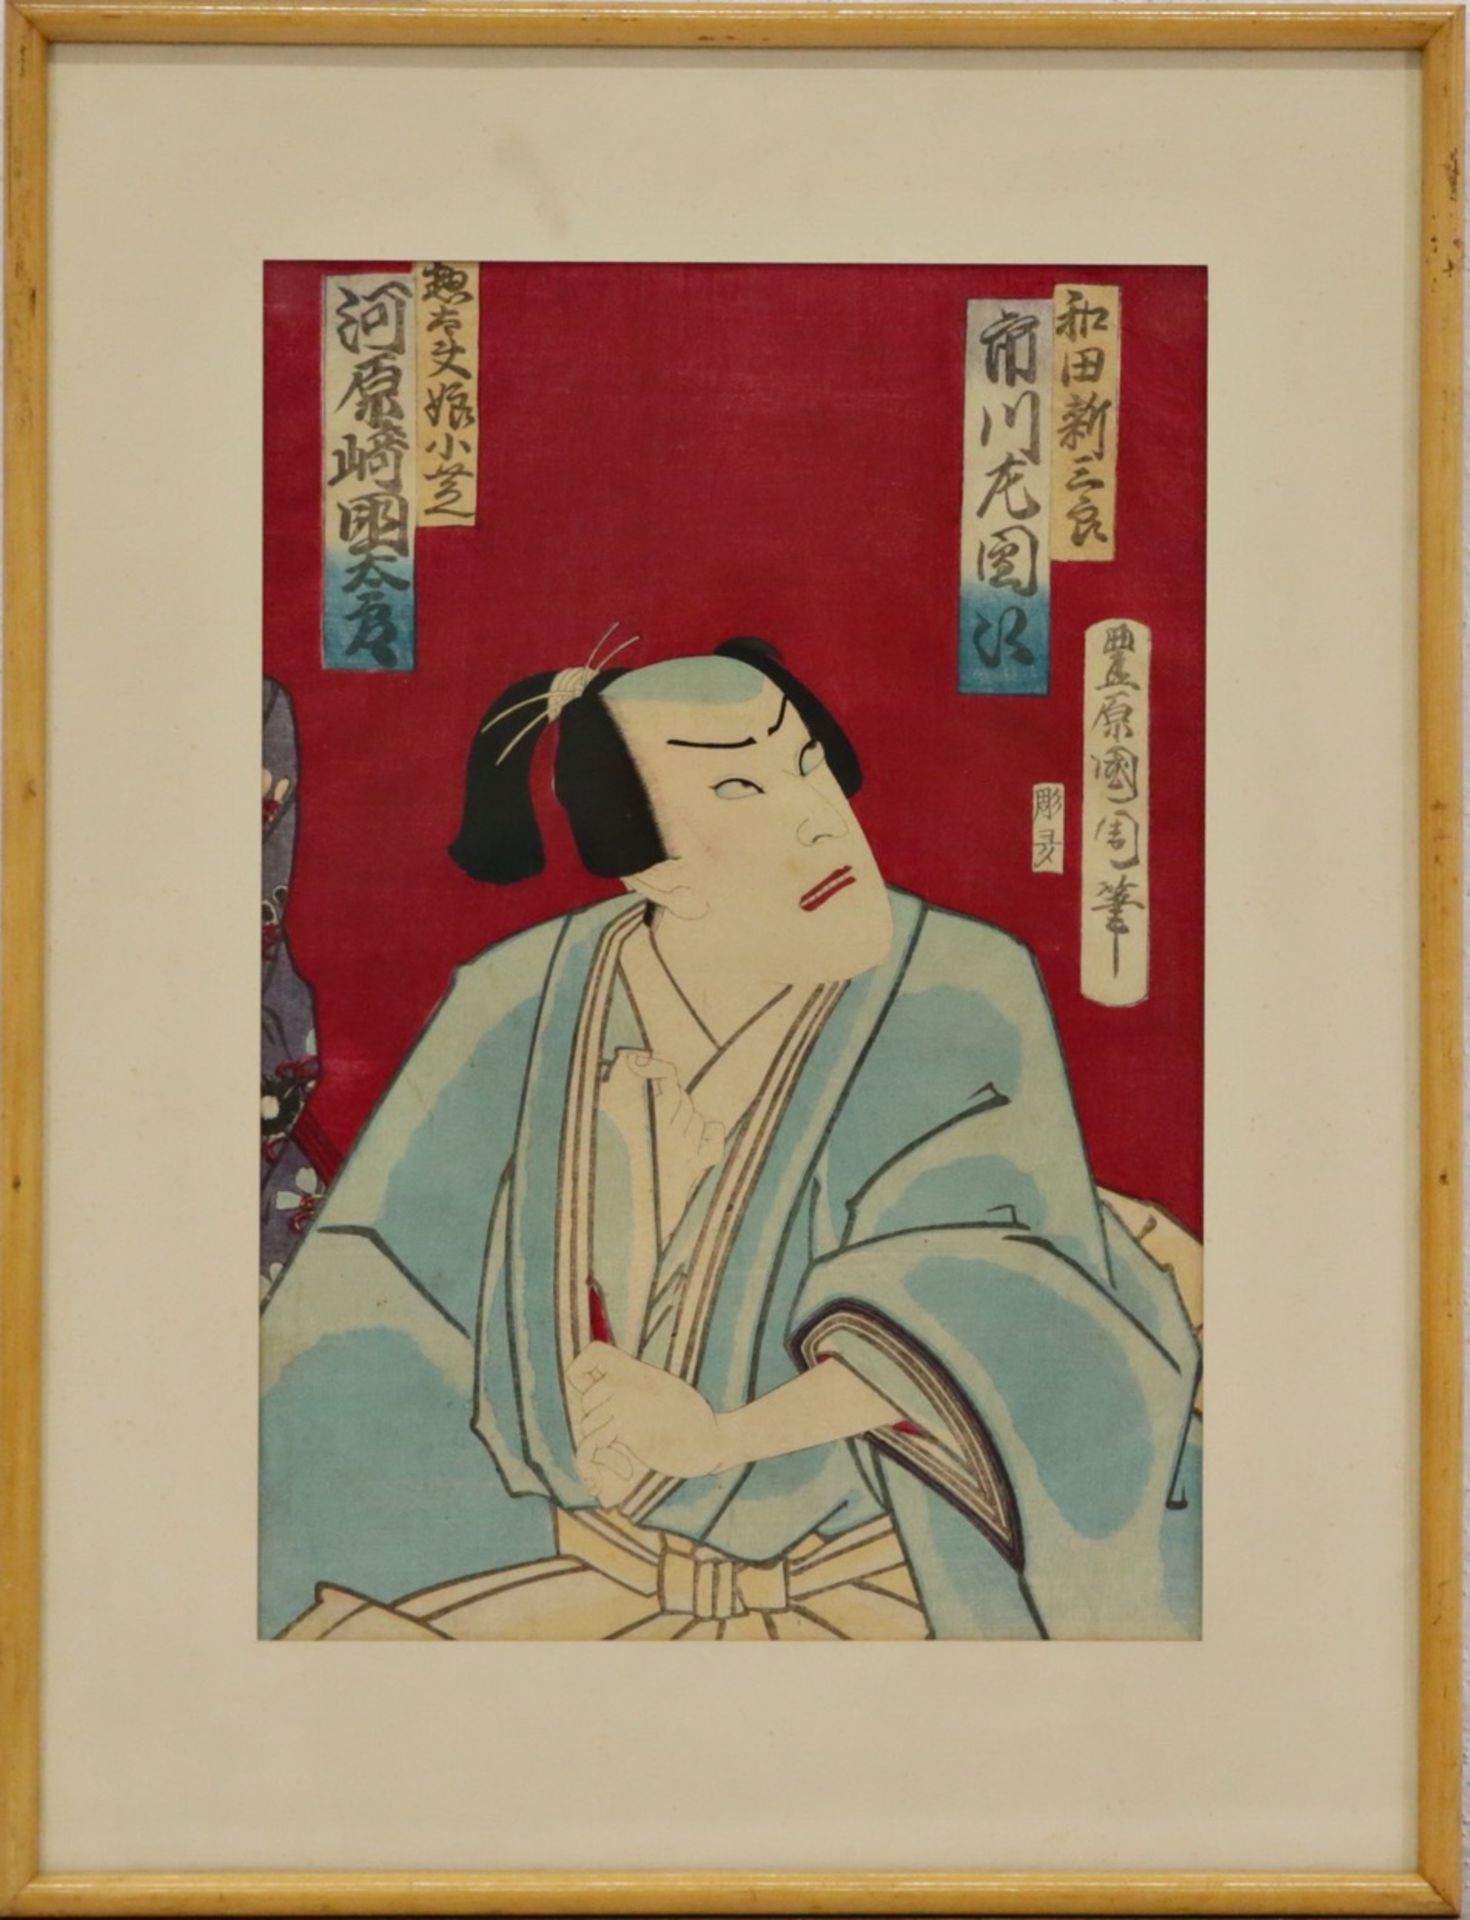 Antique Original Japanese Print, "Samurai" 19th _. Japanese art, Collectible art for home decor. - Image 2 of 4